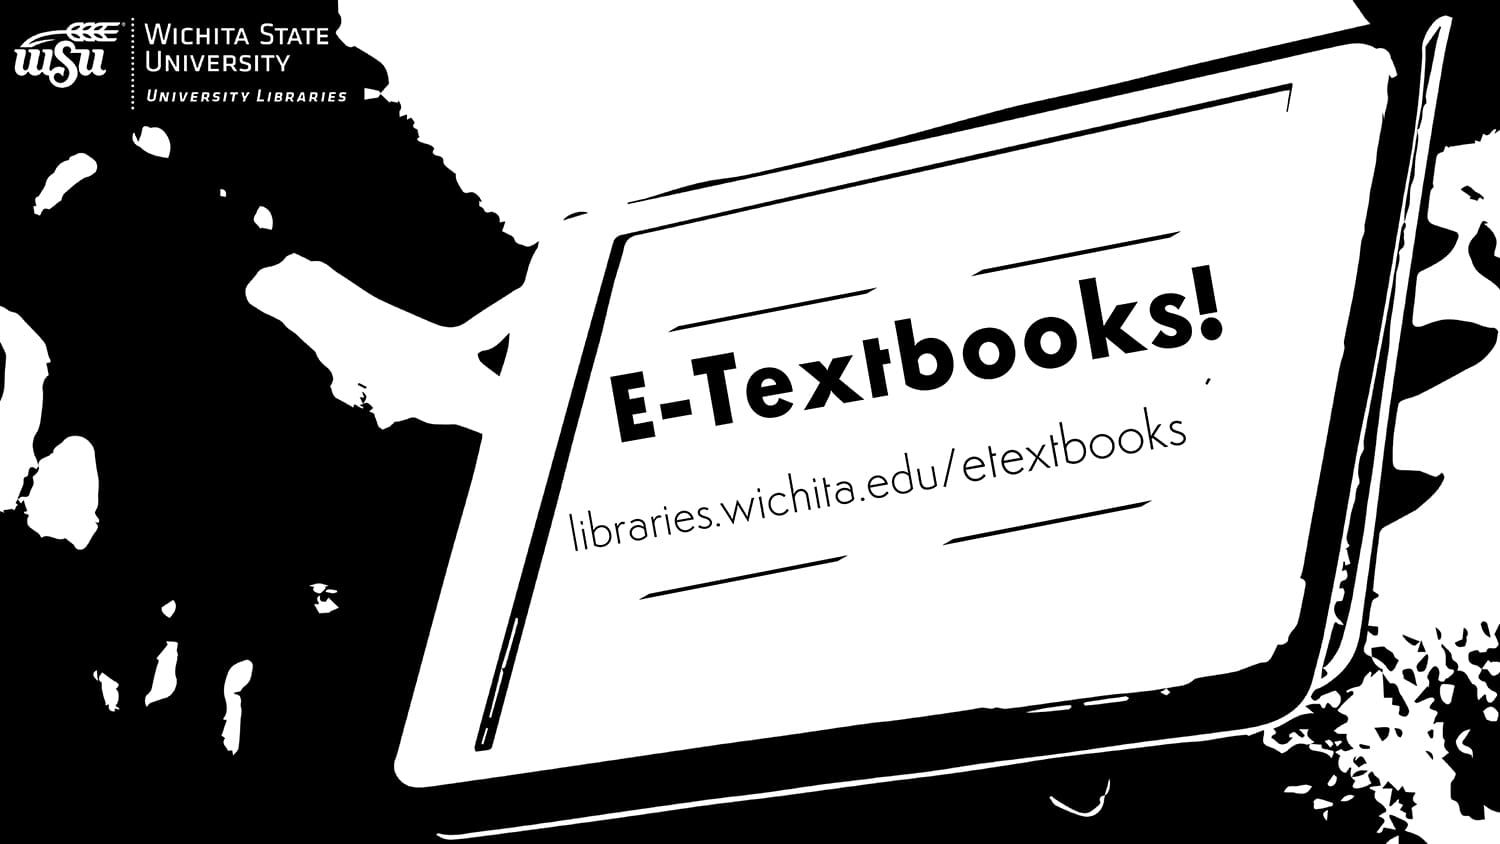 Graphic featuring text ' E-Textbooks - libraries.wichita.edu/etextbooks.'